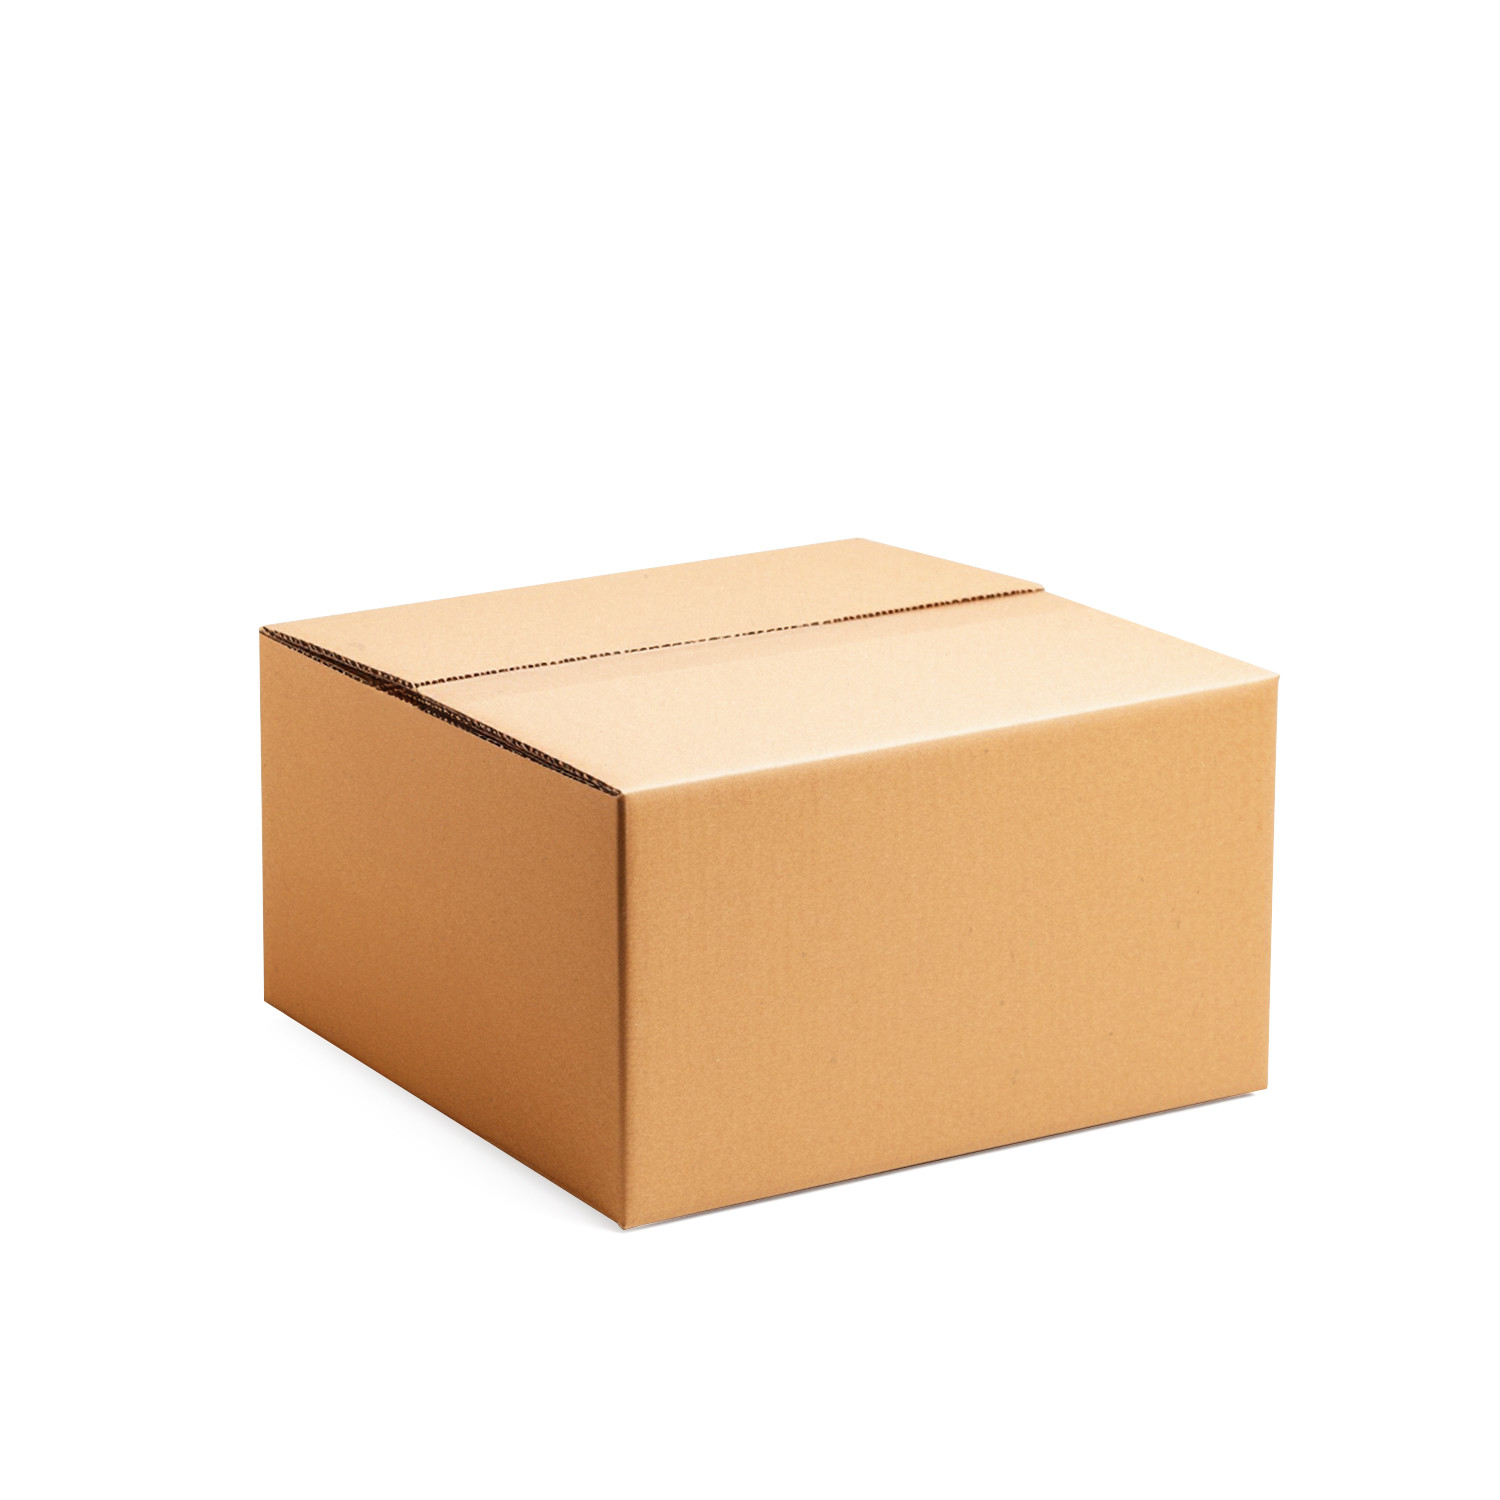 IDL-210 HD Retractable Box Cutter buy in stock in U.S. in IDL Packaging